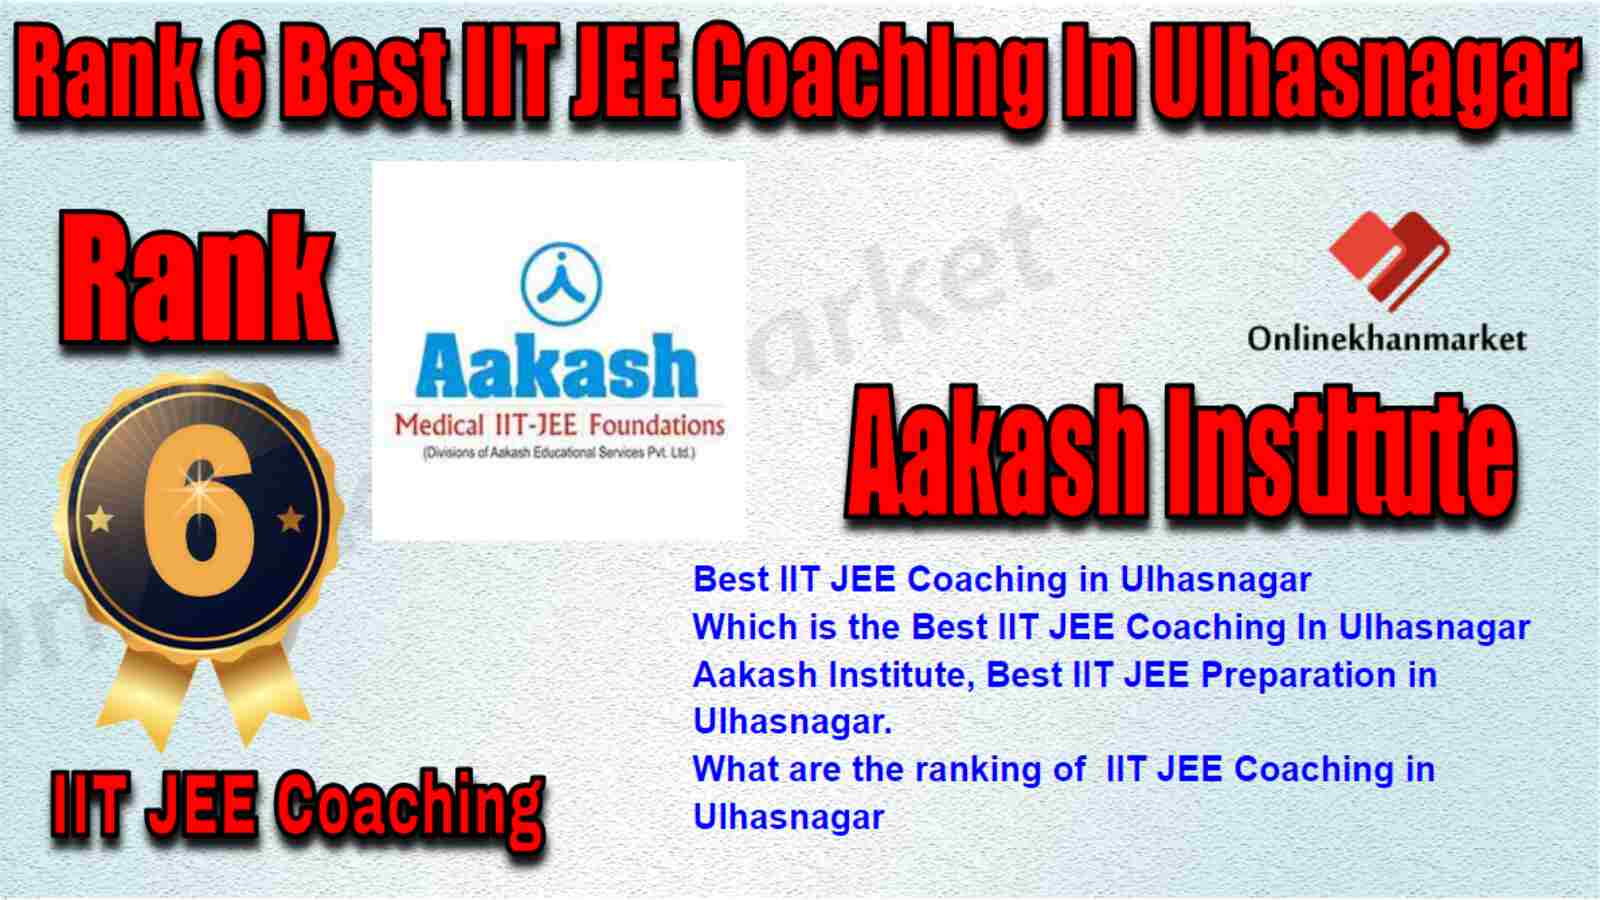 Rank 6 Best IIT JEE Coaching in Ulhasnagar